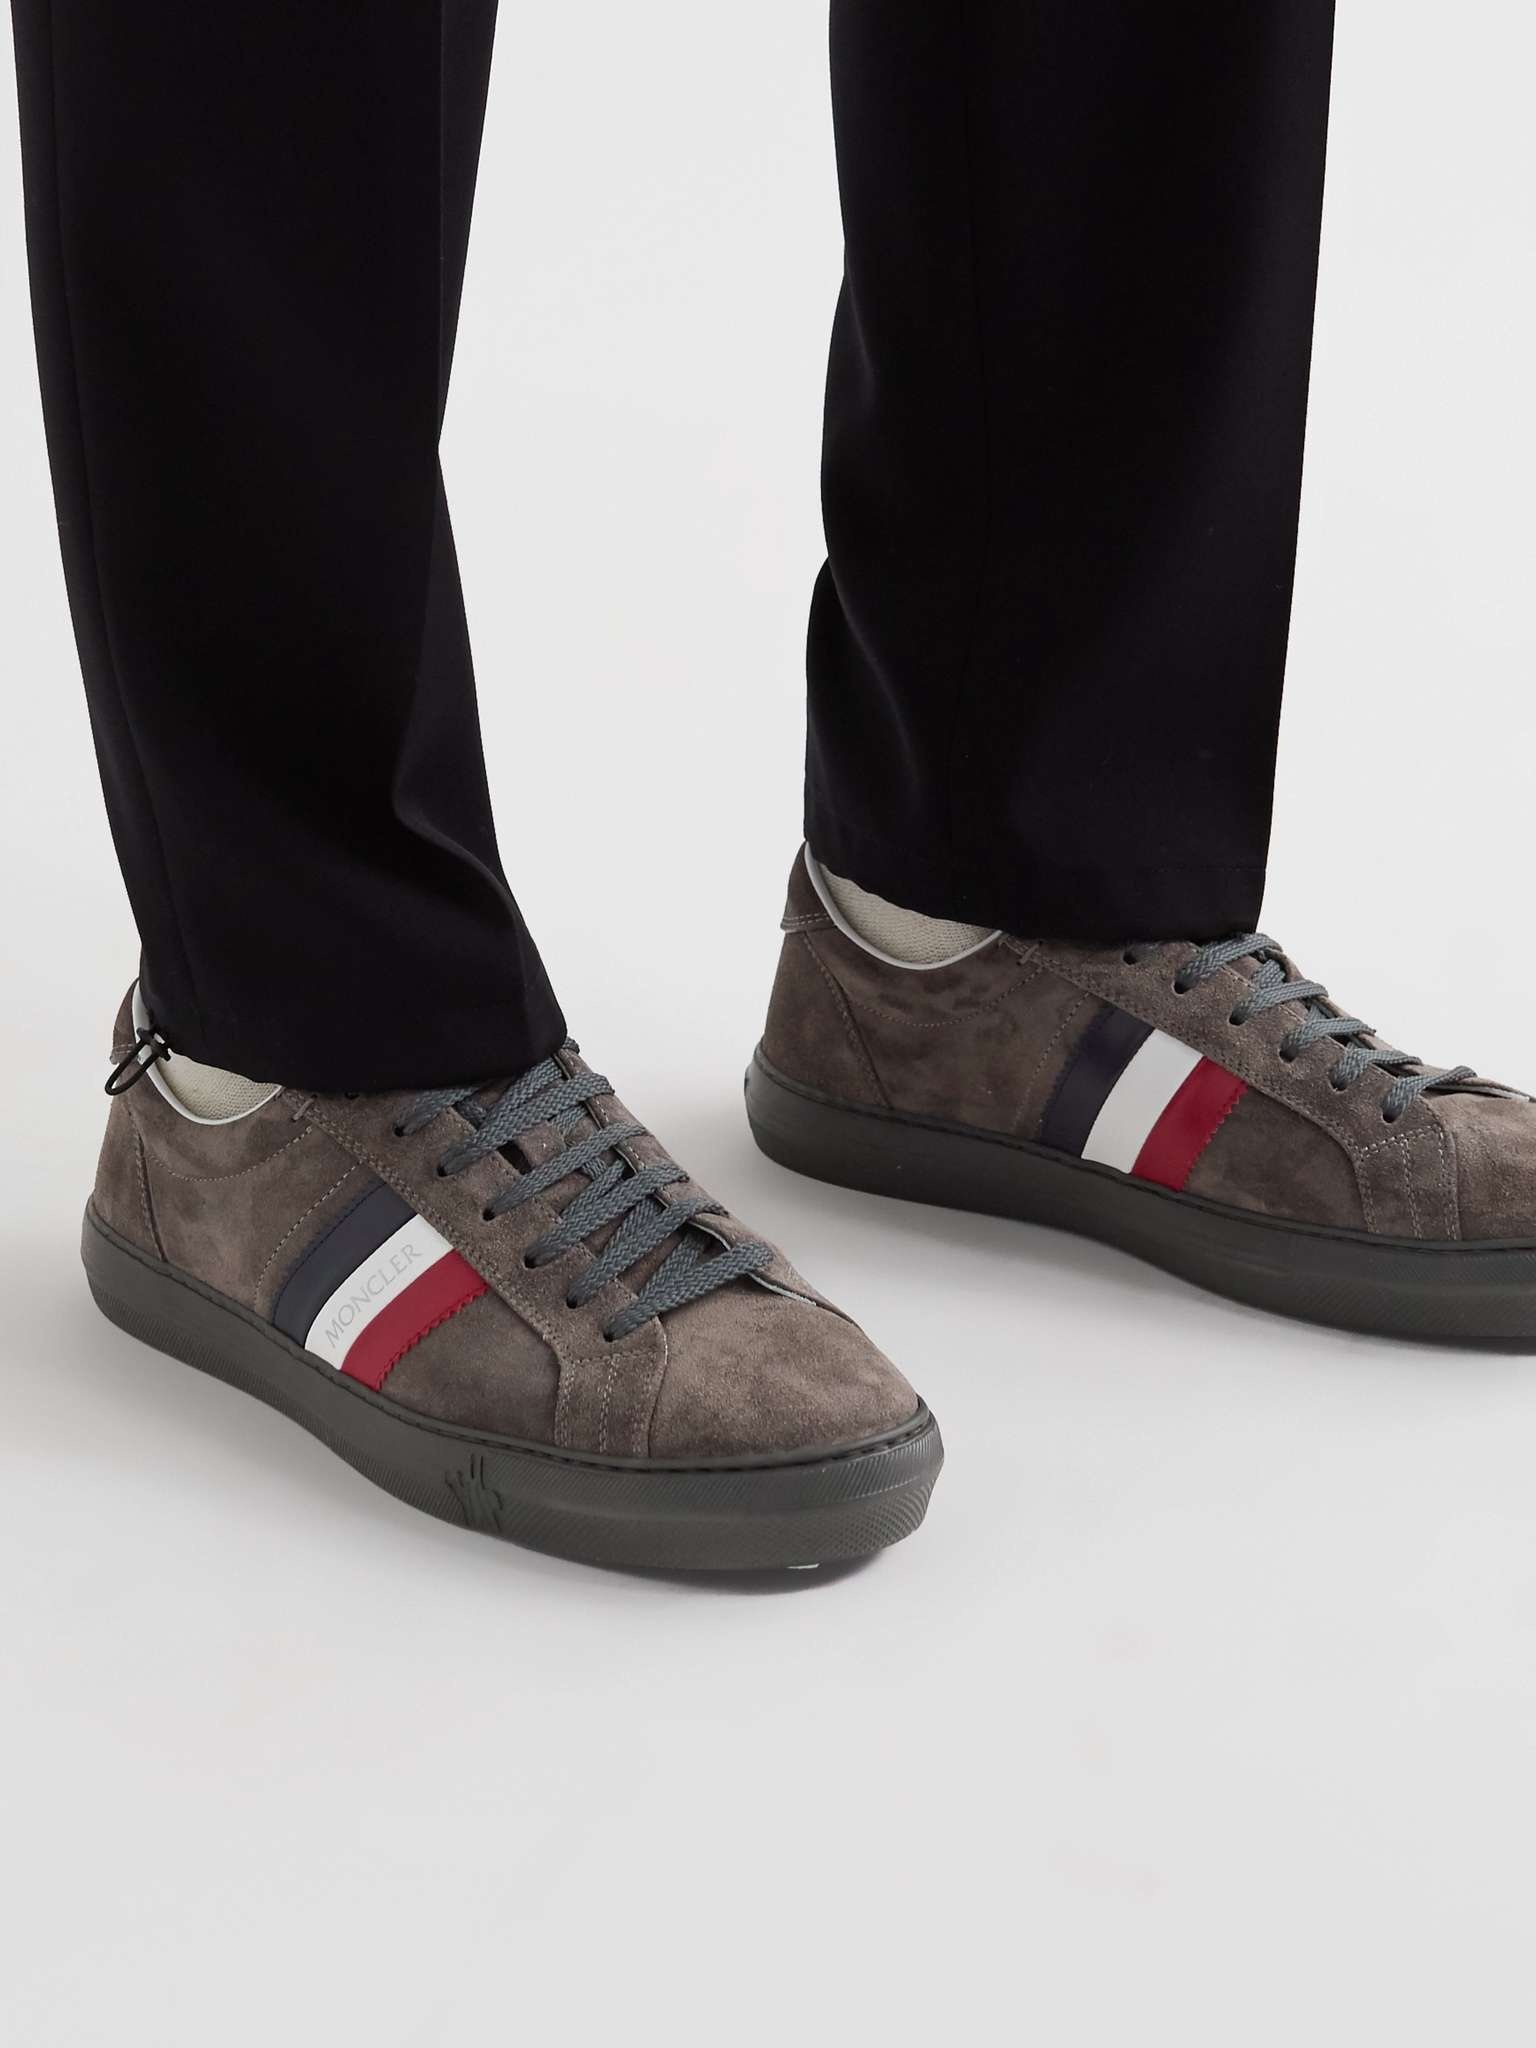 New Monaco Striped Leather Sneakers - 3